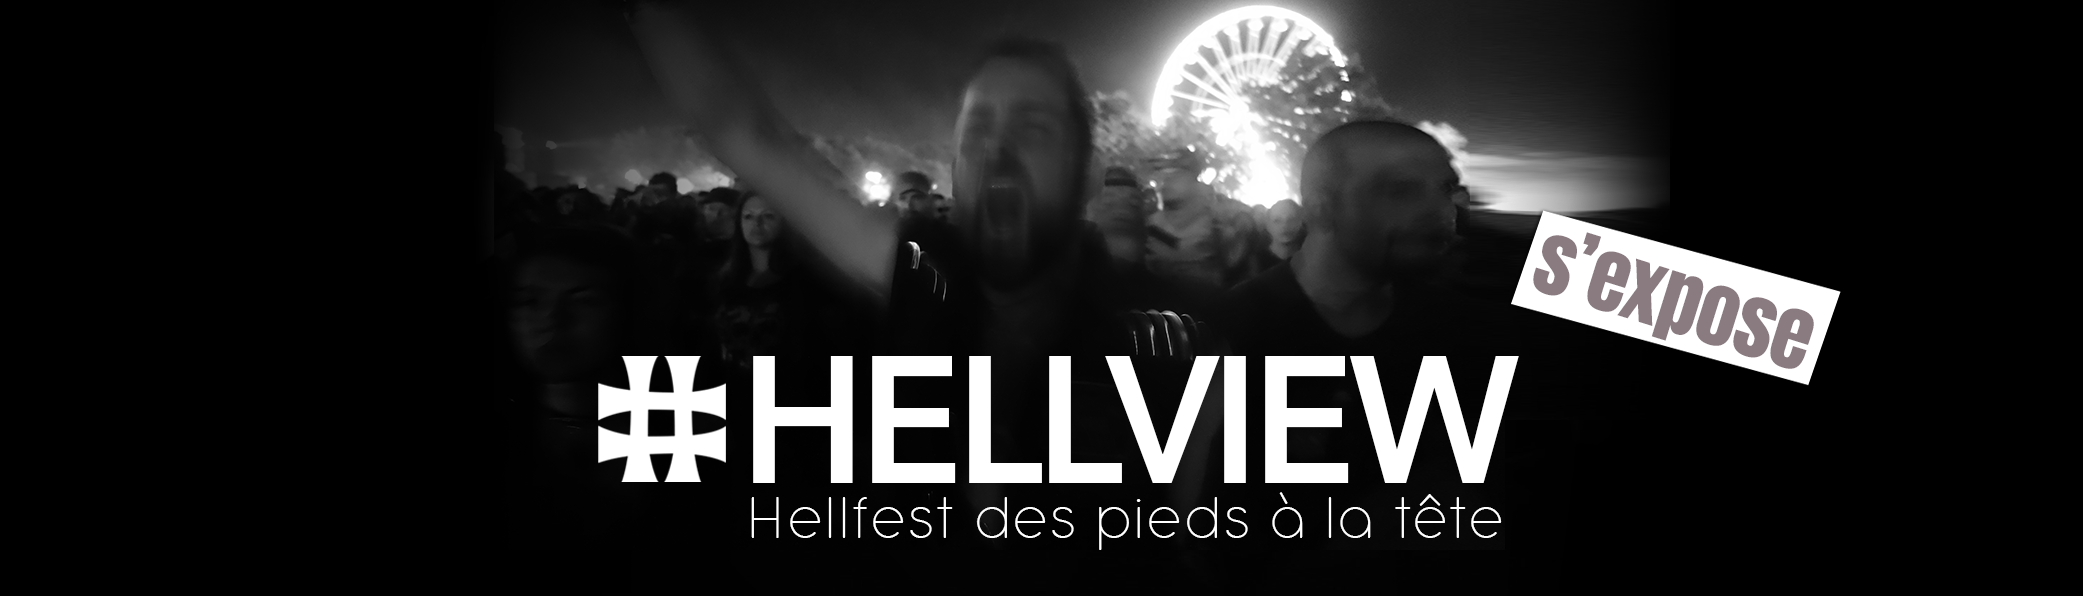 exposition-hellfest-hellview-PHOTOS